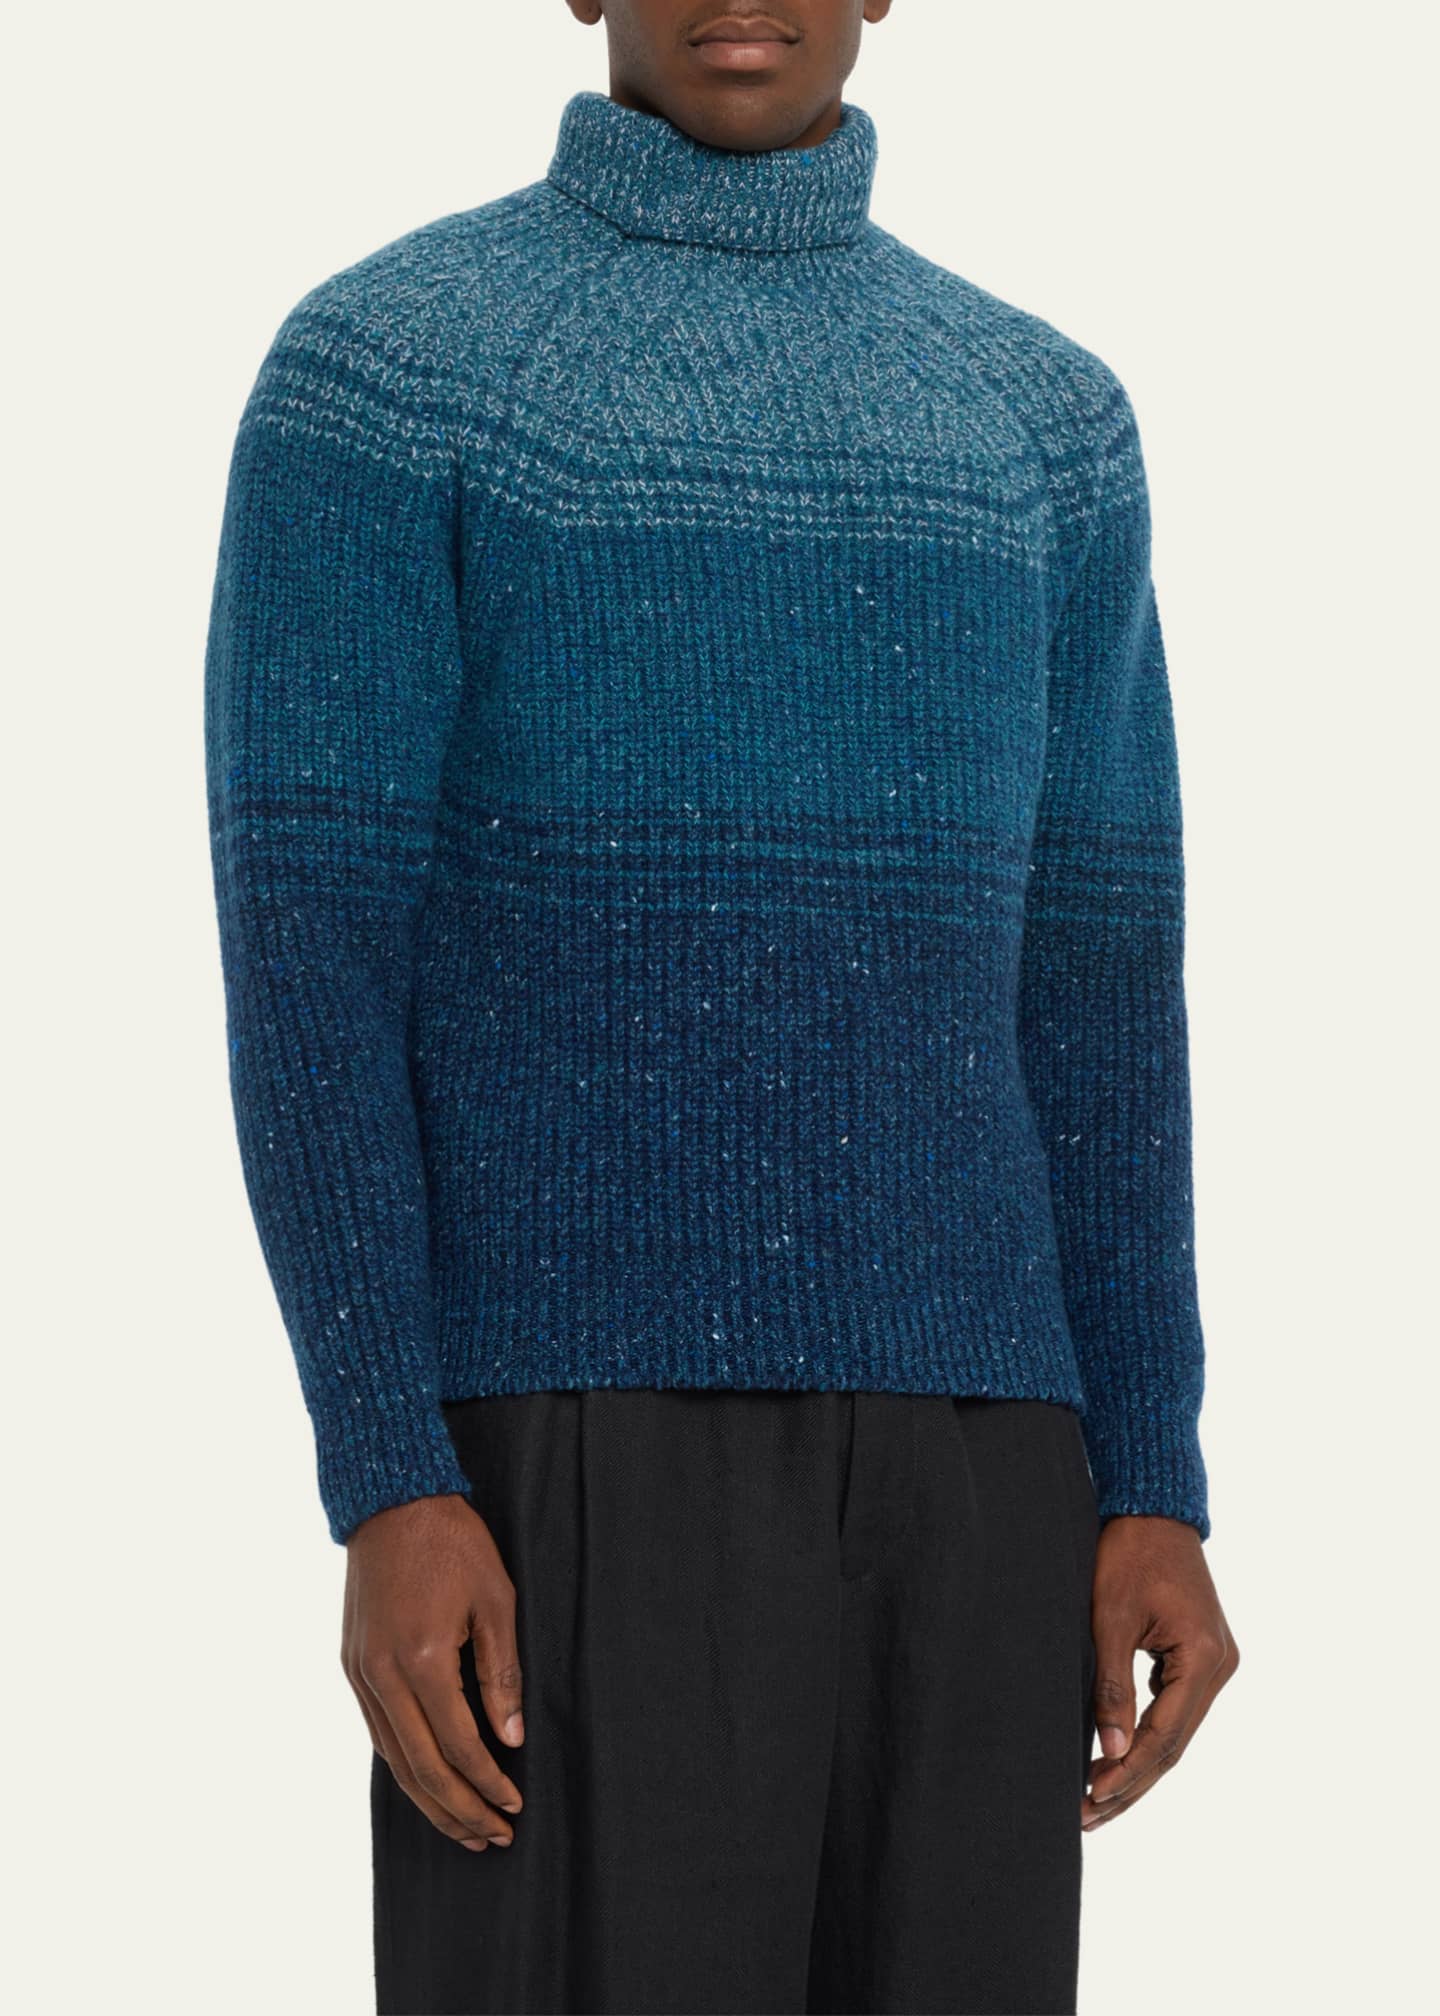 Inis Meain Men's Wool-Cashmere Landscape Boatbuilder Turtleneck Sweater ...